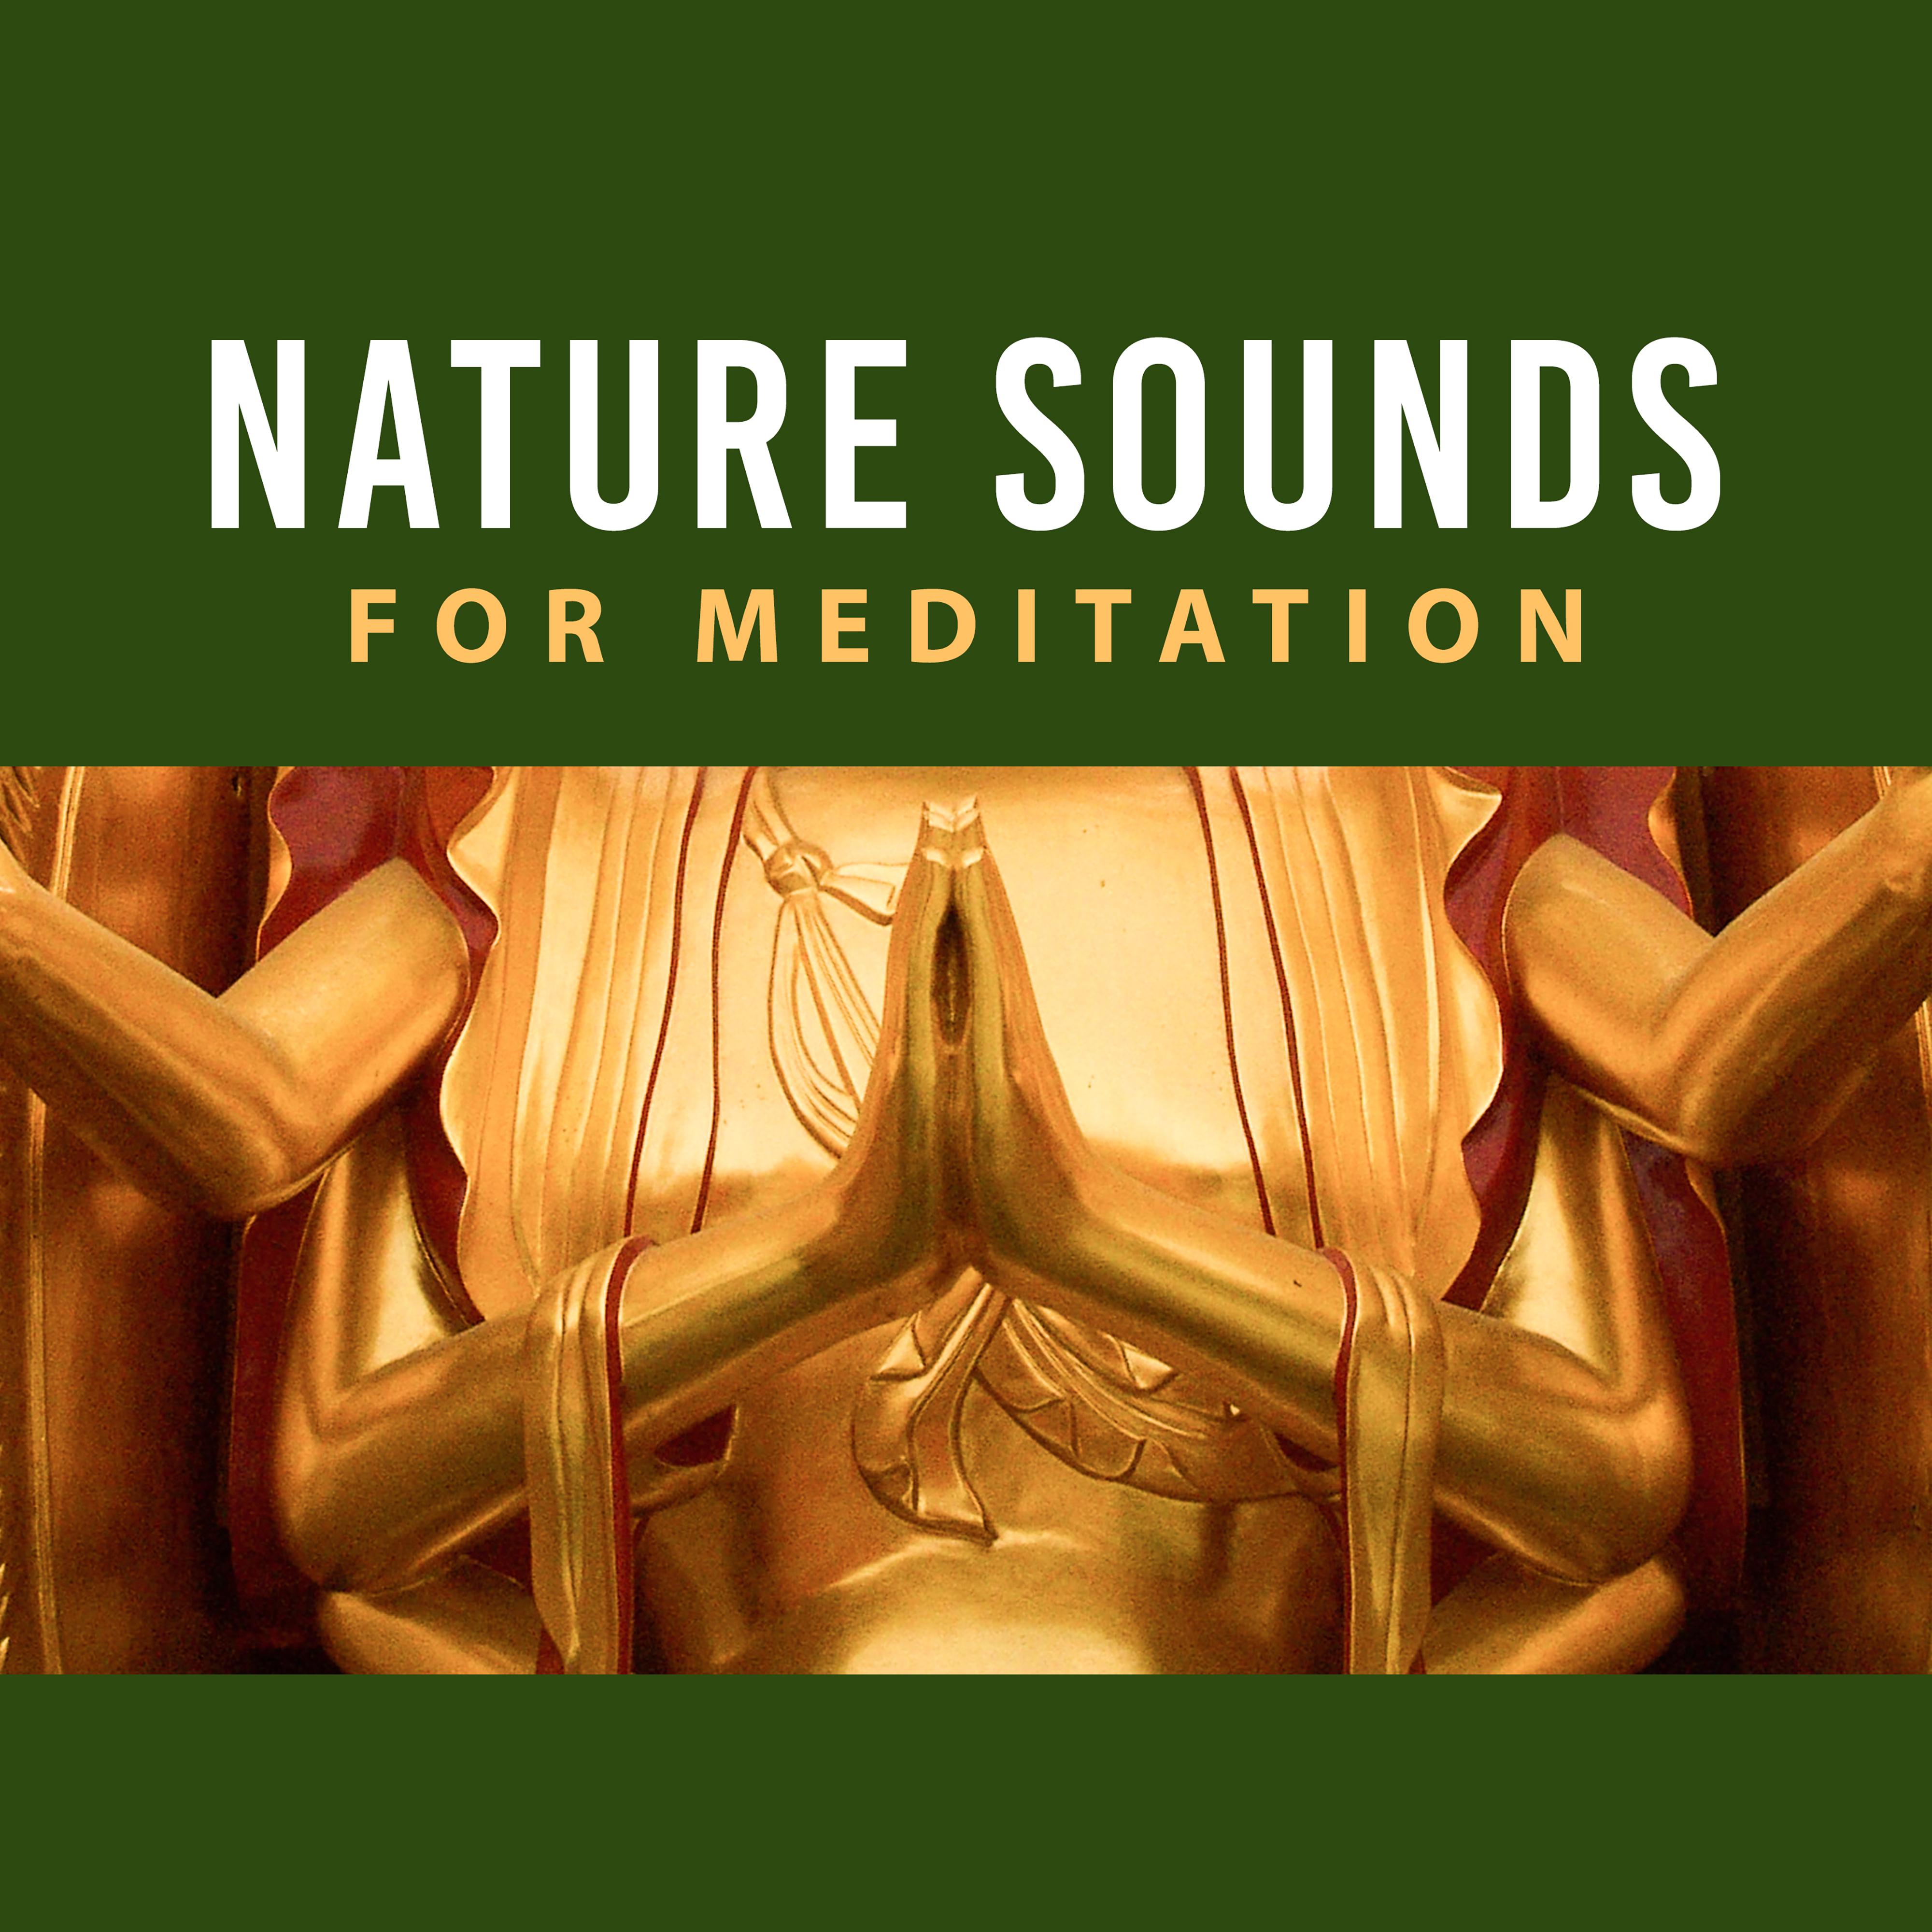 Nature Sounds for Meditation  Yoga Training, Spiritual Healing, Meditation Music, Focus, Peaceful Mind